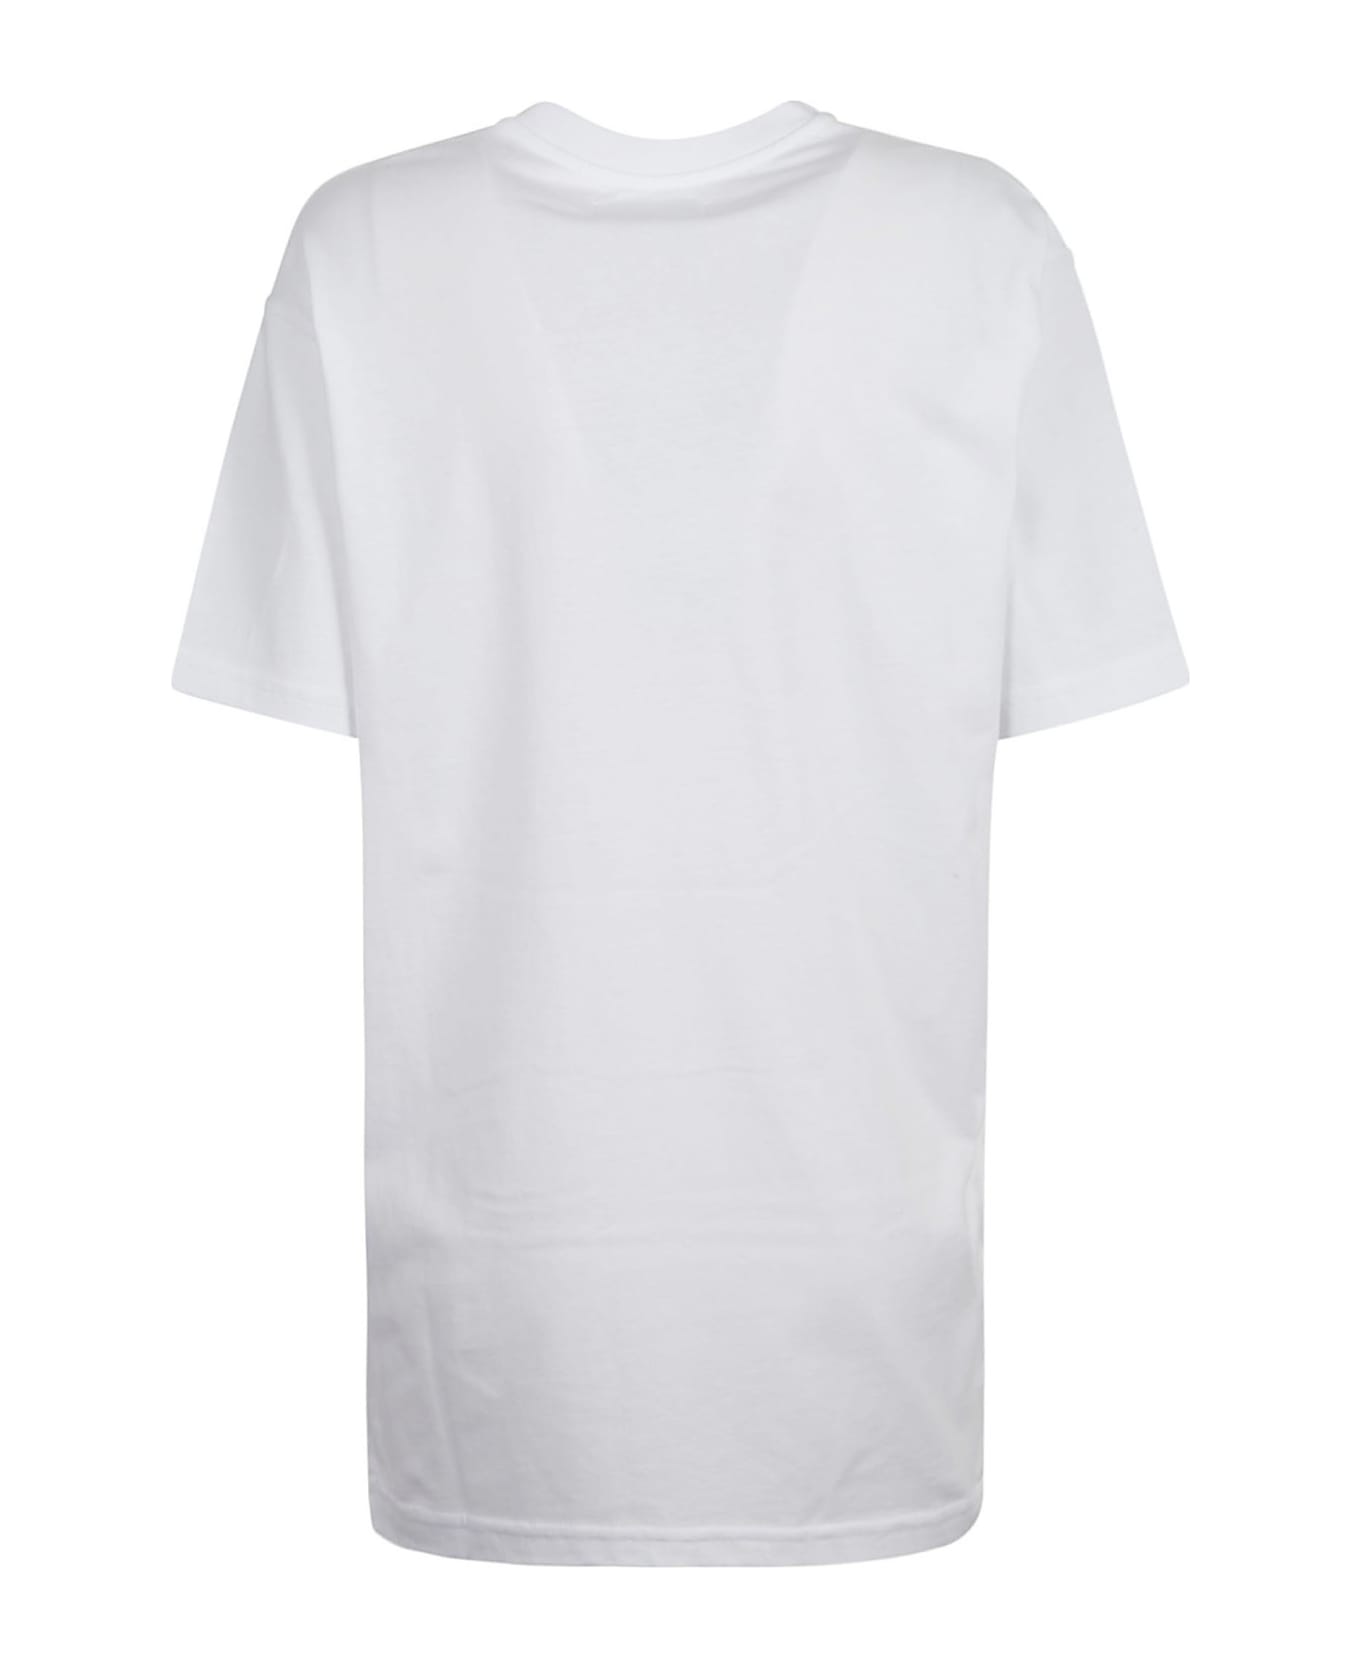 Vivienne Westwood Summer Classic T-shirt - White Tシャツ